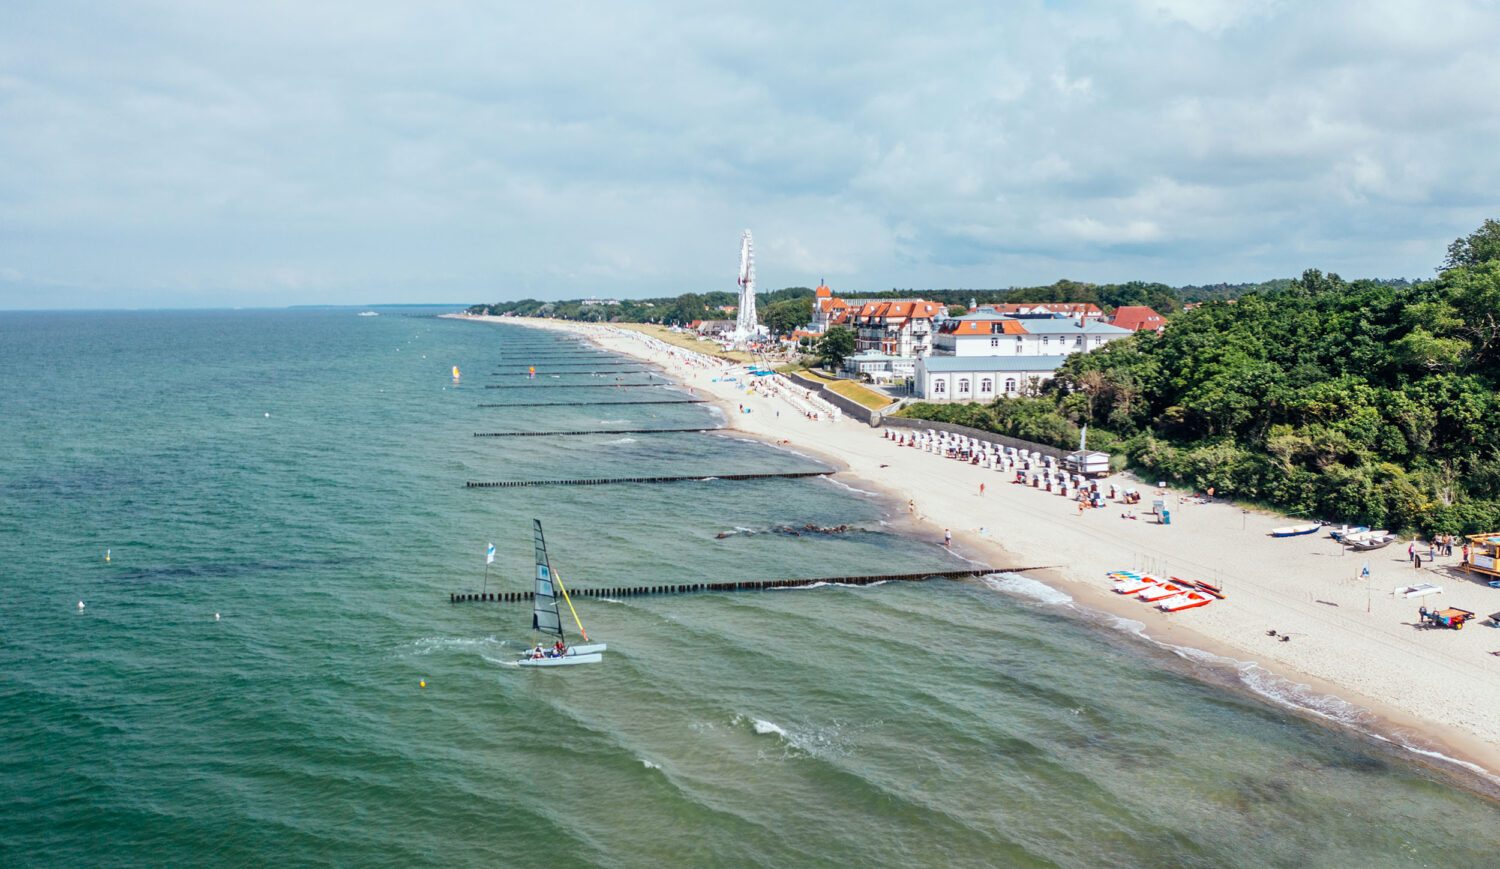 The fine sandy beach of Kühlungsborn is almost six kilometers long